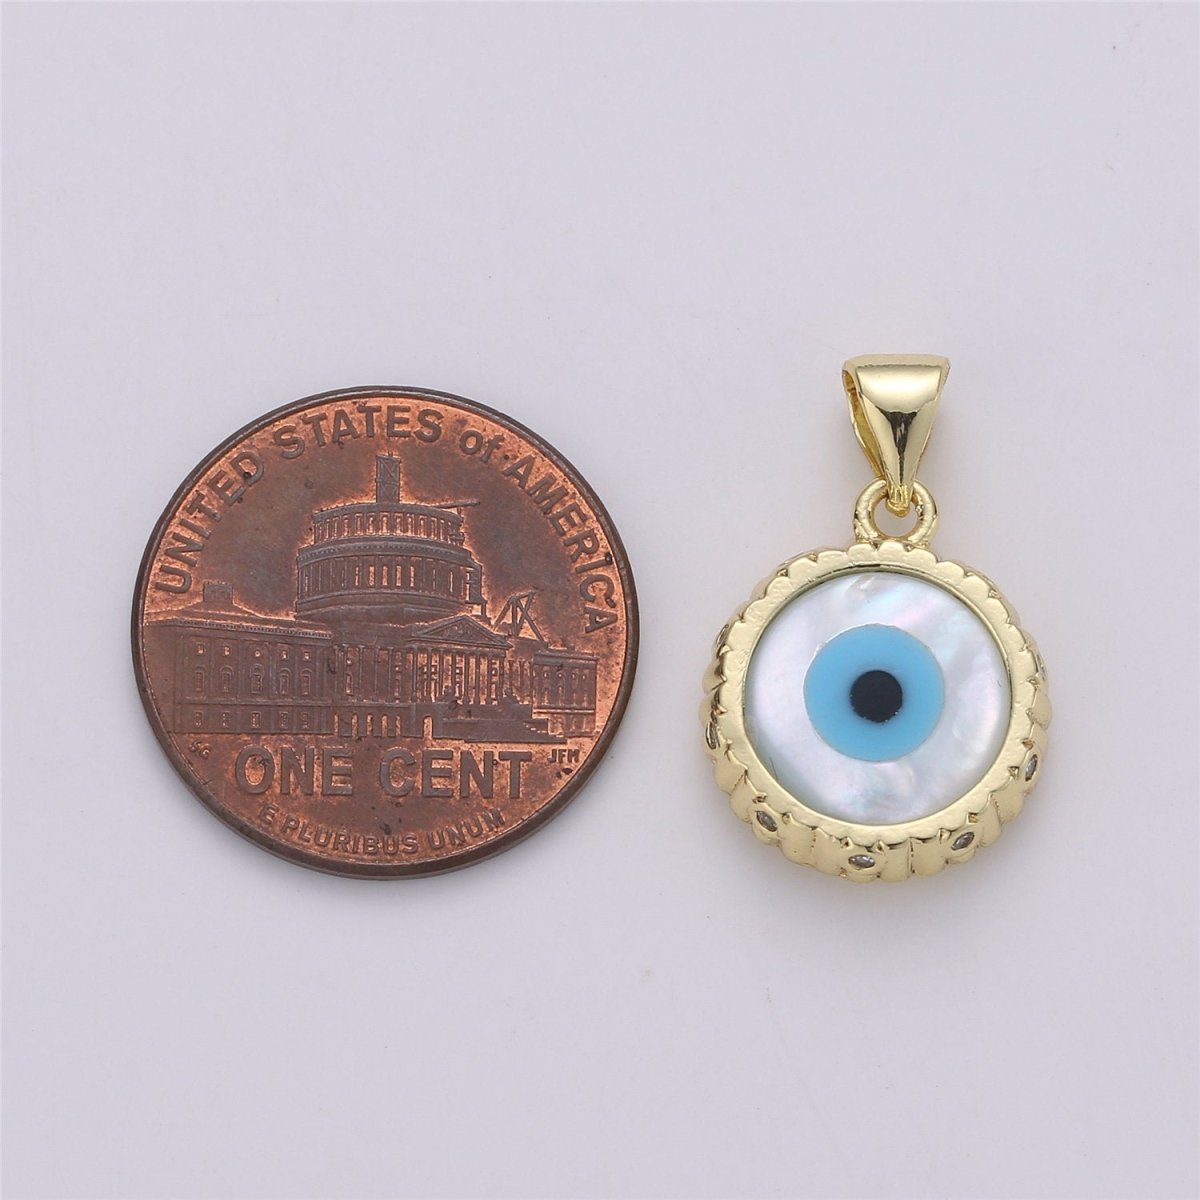 14k Gold Filled Evil Eye Charm Extra Tiny Evil Eye Pendant Charm eye of ra minimalist jewelry Gift for Her Bridal necklace component I-592 I-761 - DLUXCA